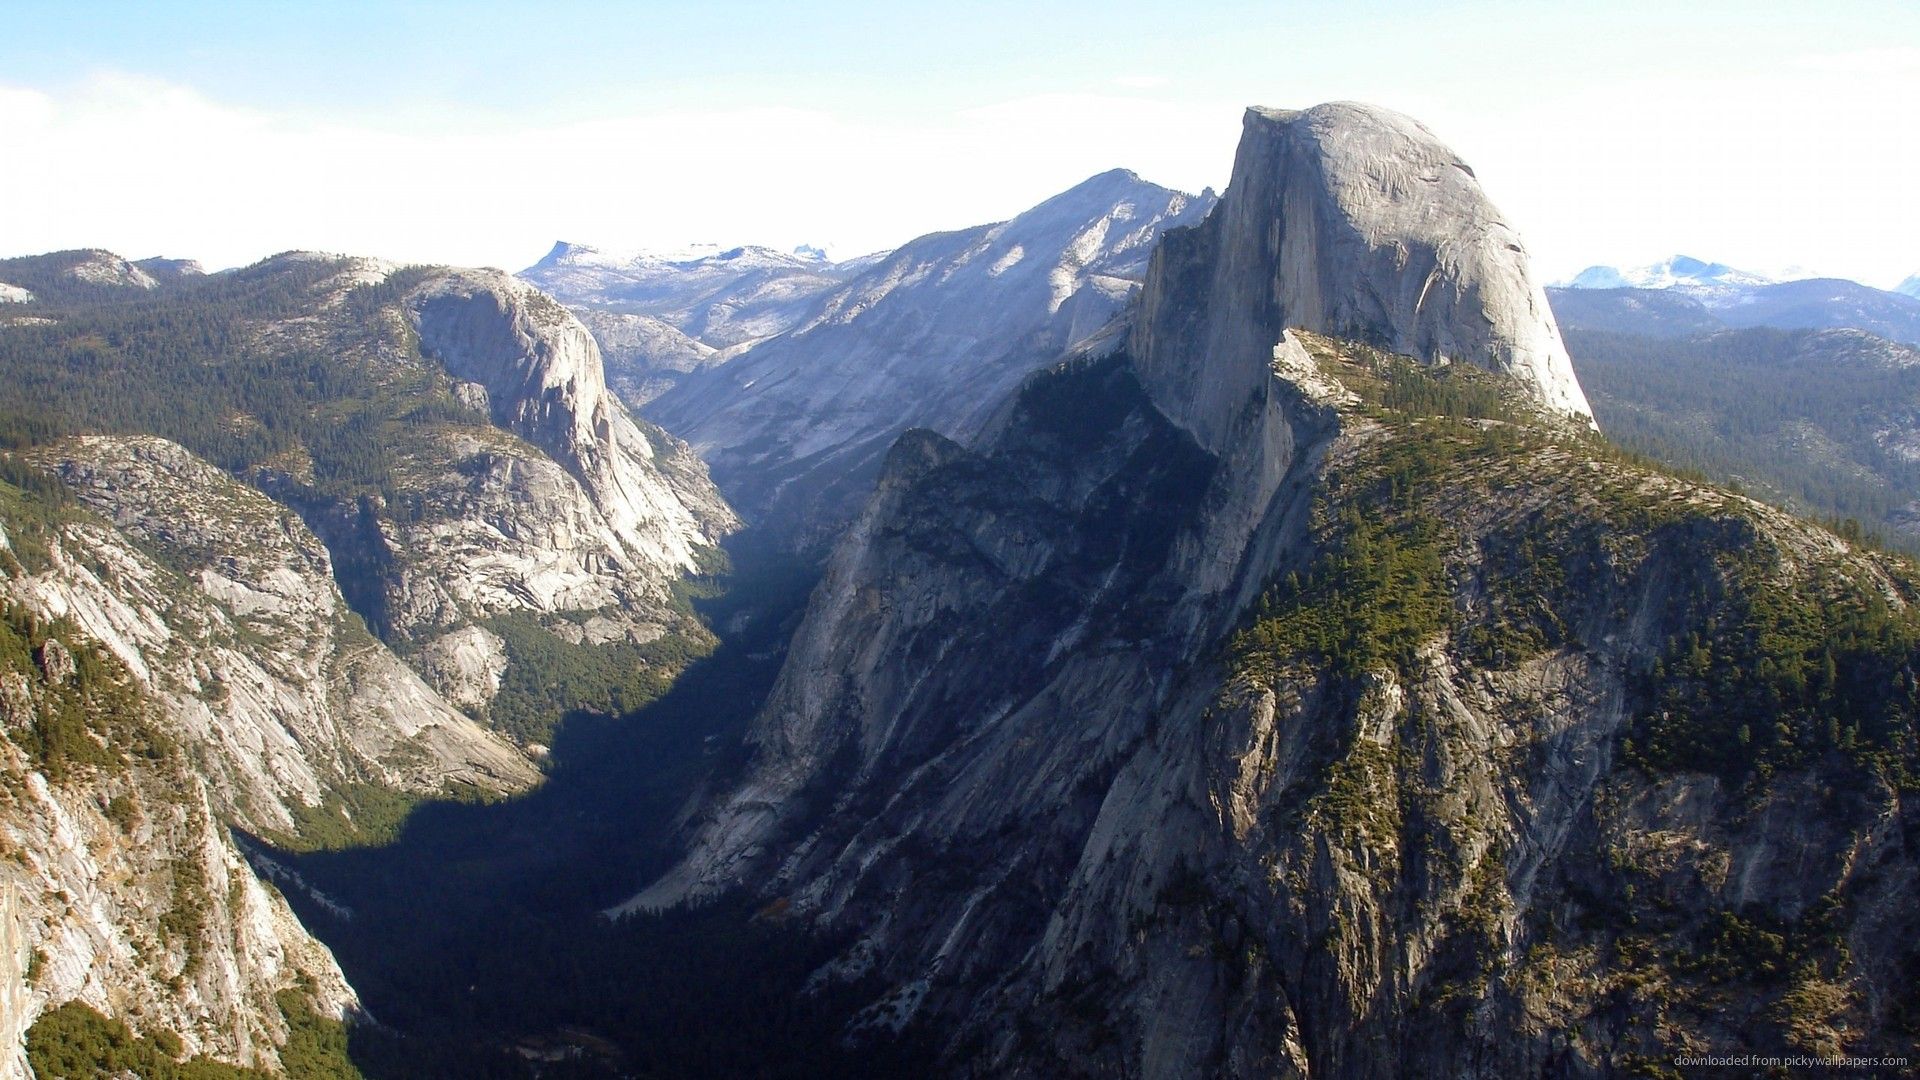 Download 1920x1080 Yosemite National Park Mountains Wallpaper